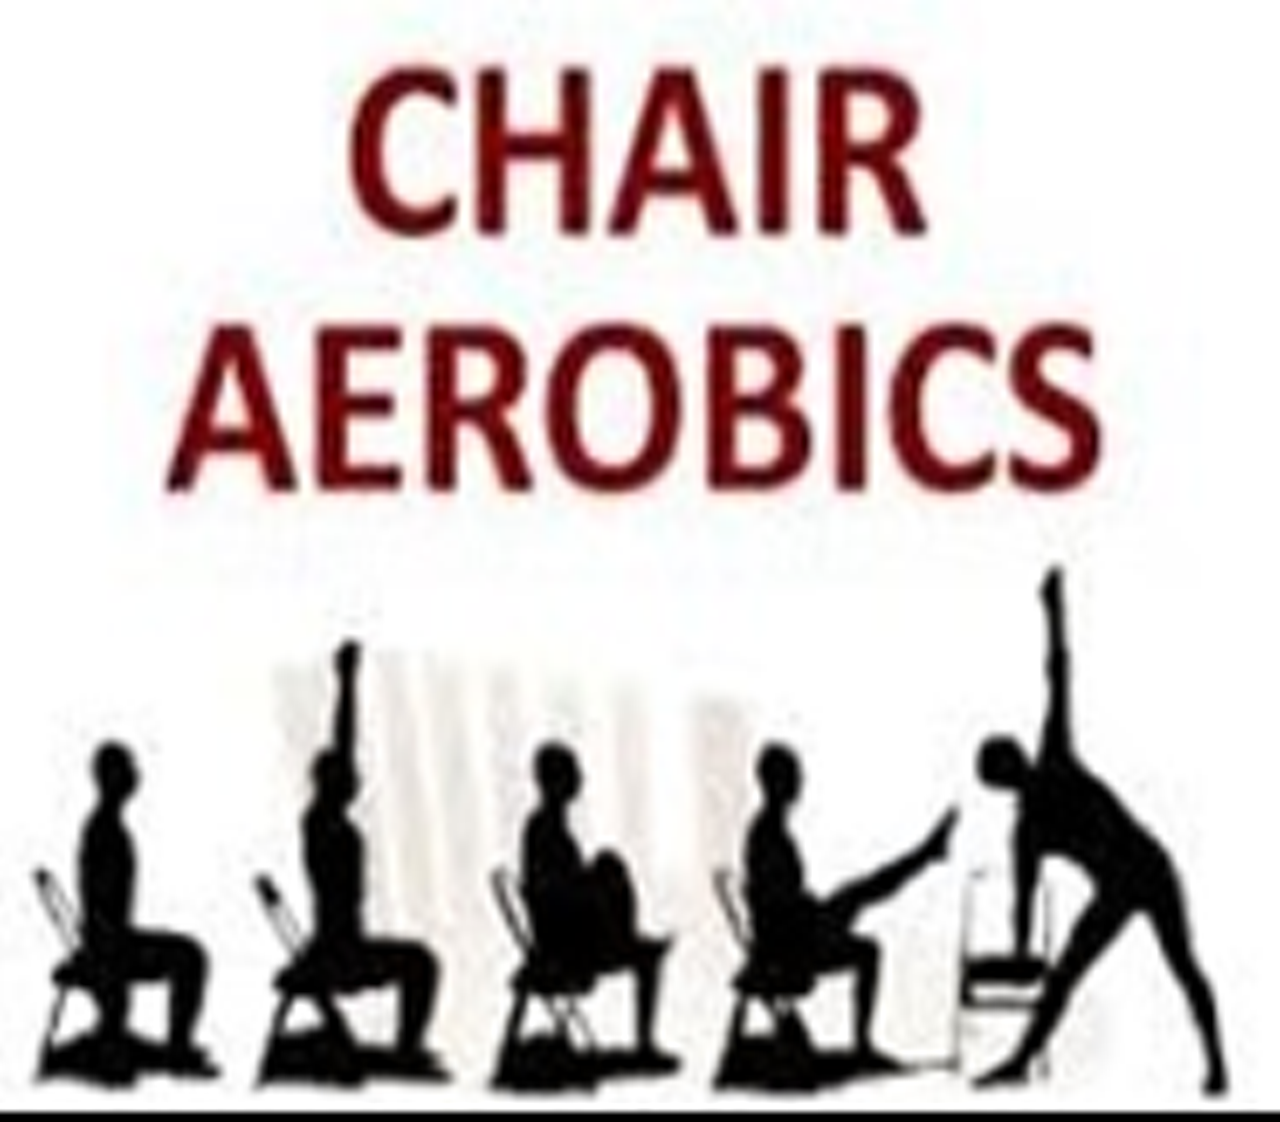 https://media1.illinoistimes.com/illinoistimes/imager/u/zoom/14873888/chair_aerobics_3.png?cb=1693329534